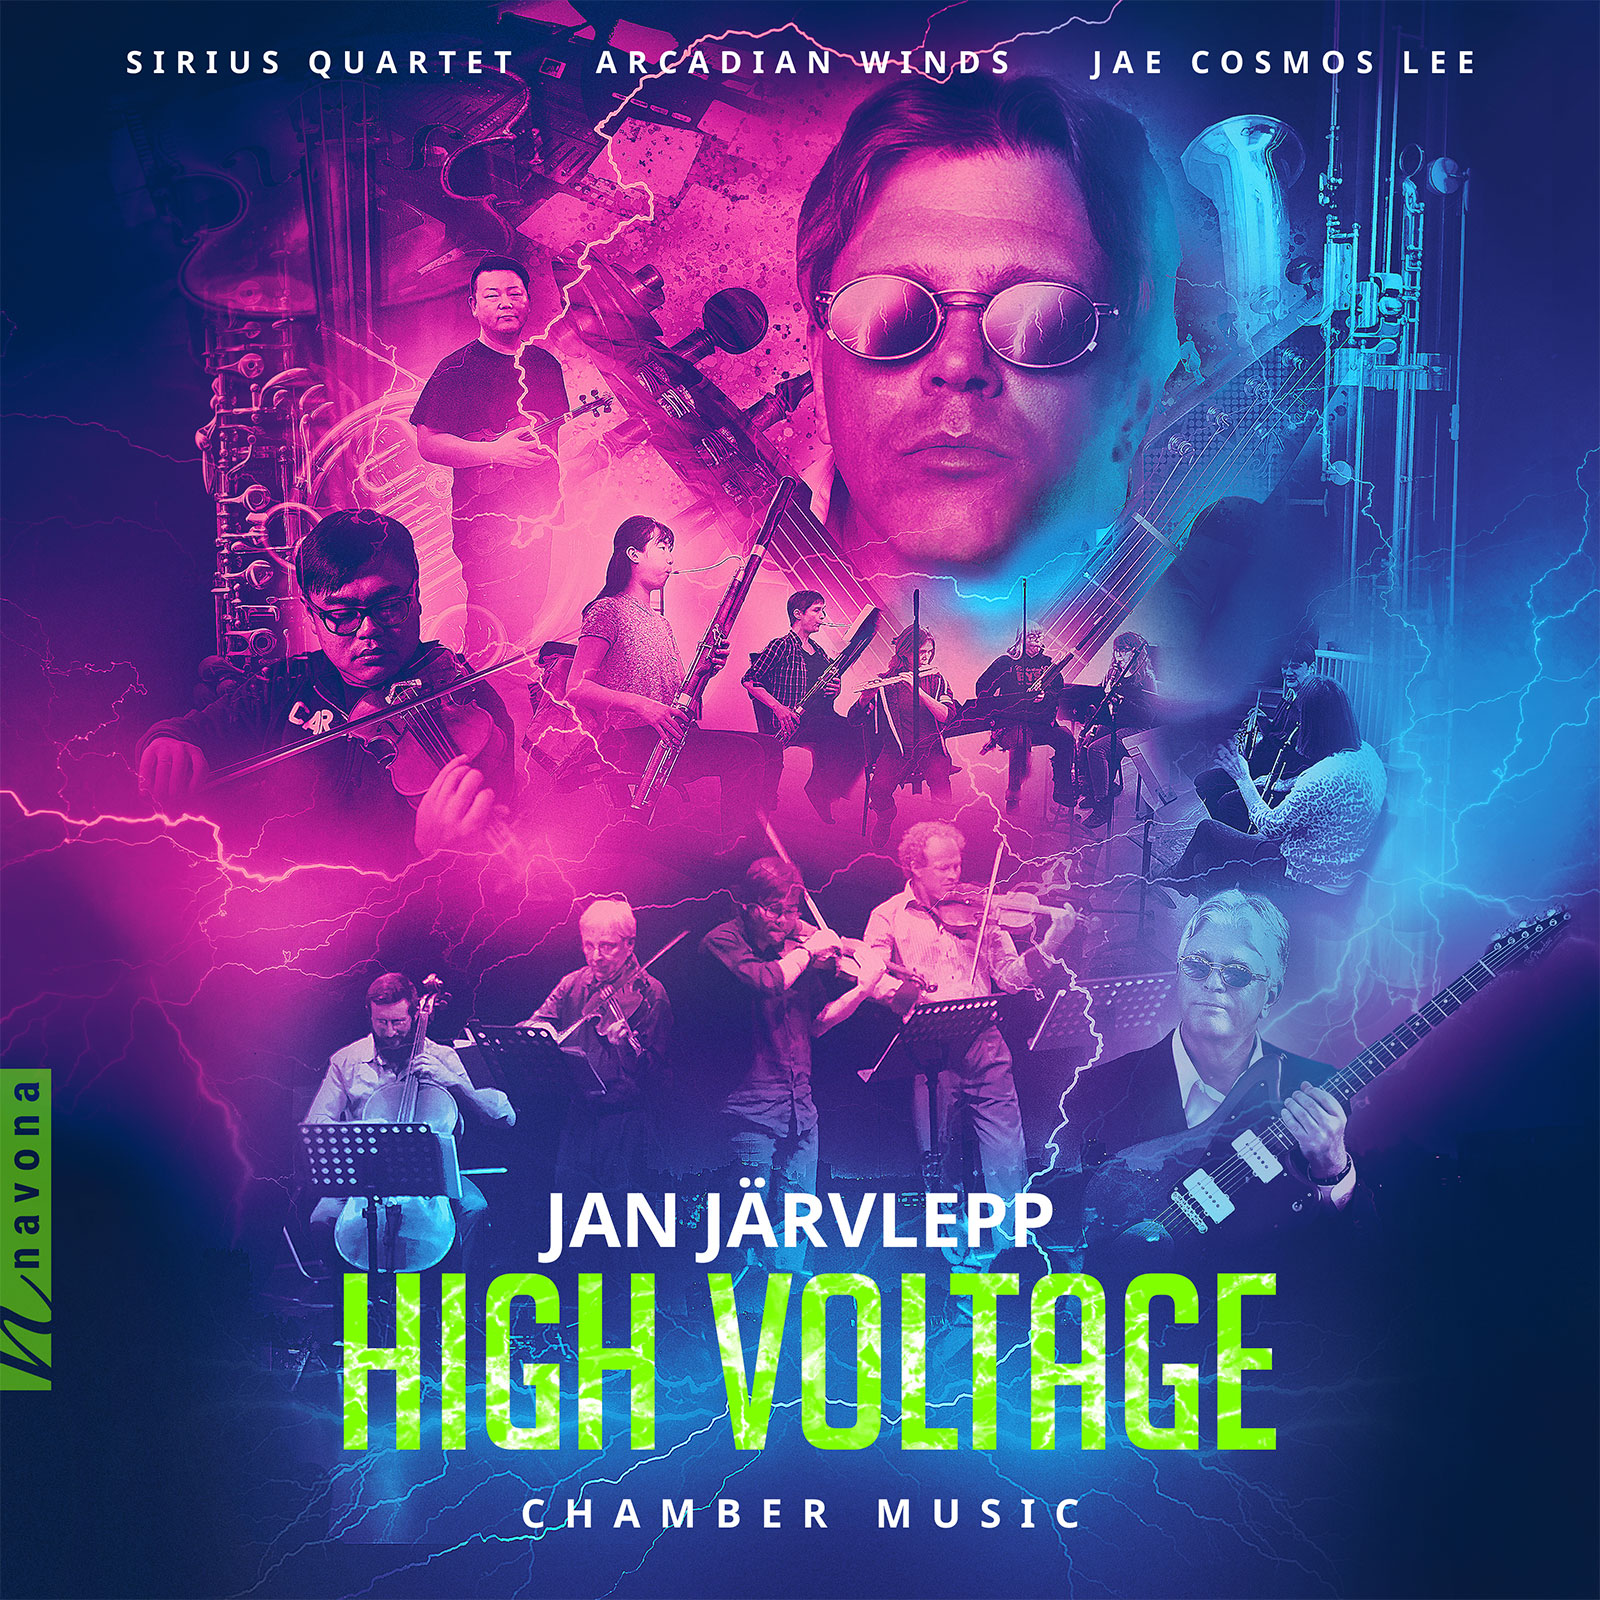 HIGH VOLTAGE - Jan Jarvlepp - Album Cover